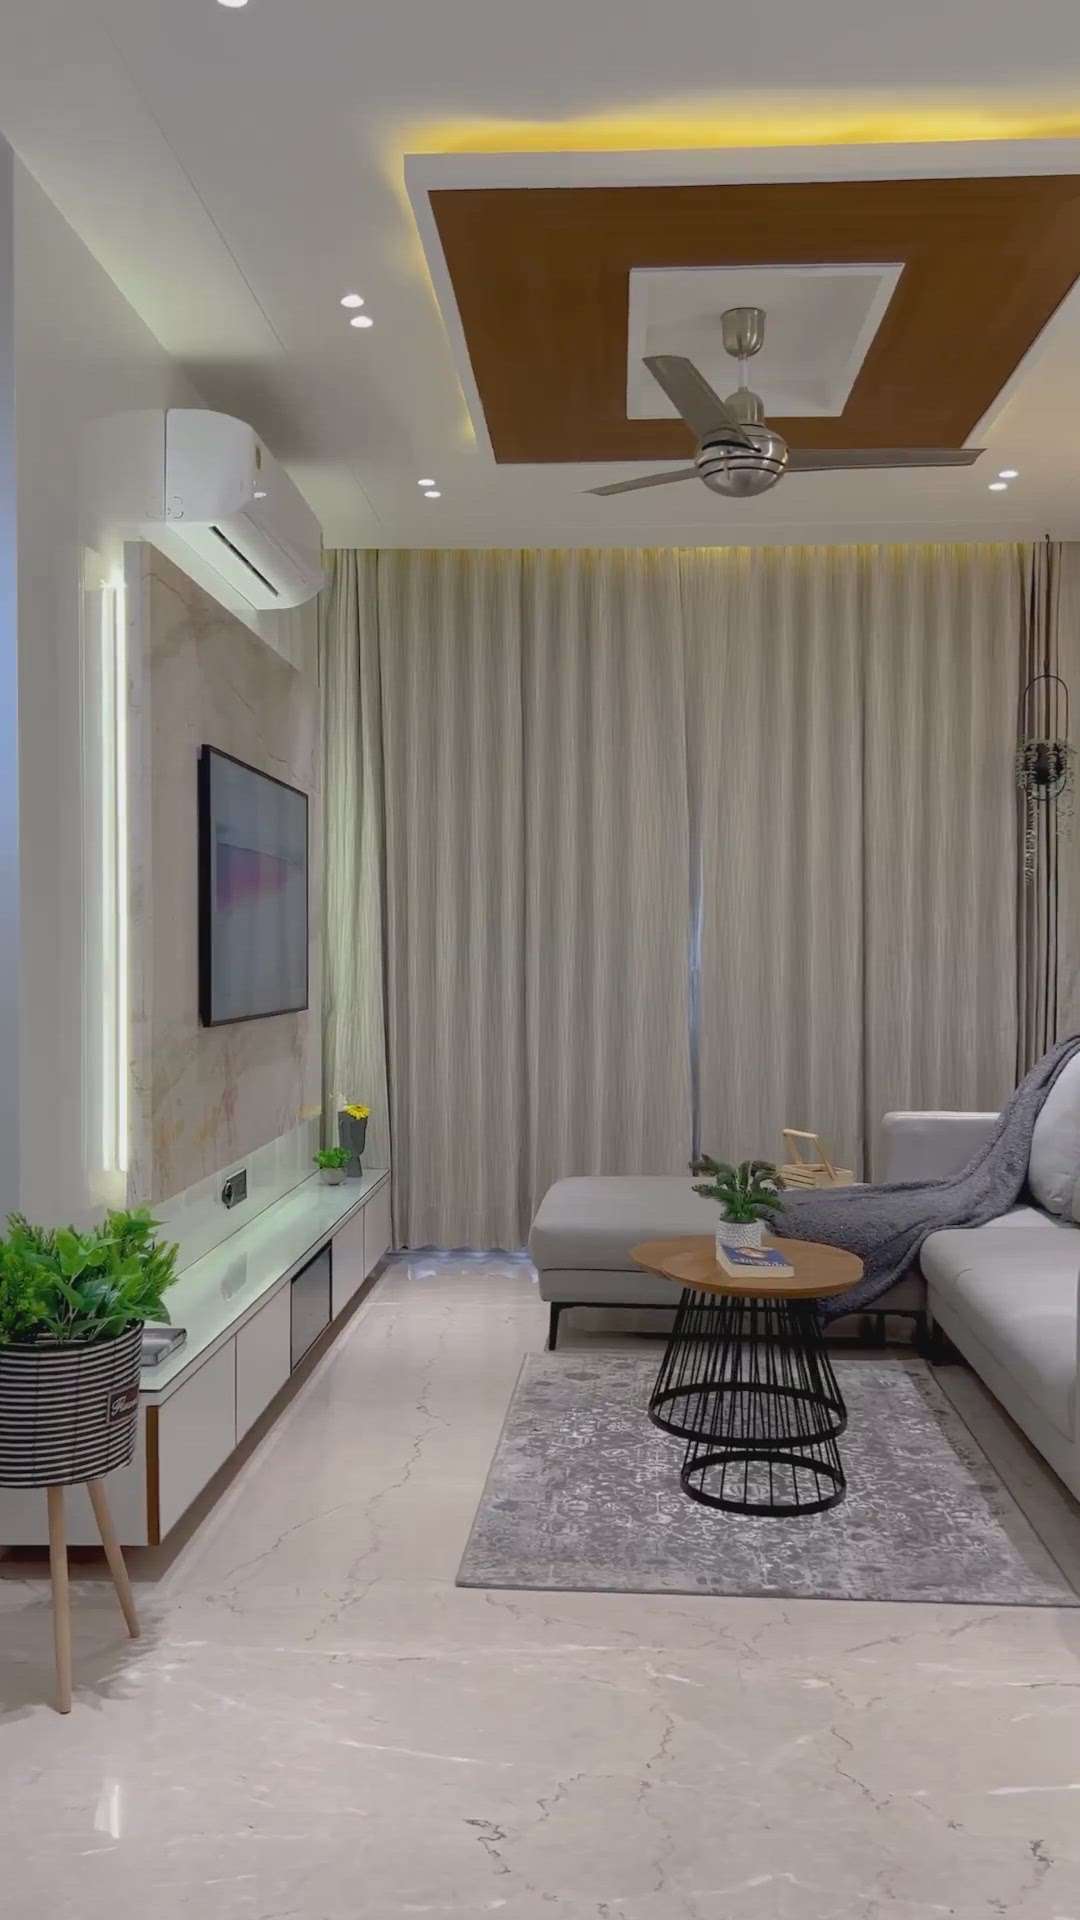 Beautiful Living Area with over the top TvCabinet gives a luxury look ✨

✨ Opal Construction & Interior
✨ Contact - 8319099875

#HouseRenovation #renovations #InteriorDesigner #KitchenInterior #WalkInWardrobe #MasterBedroom #BedroomDecor #KingsizeBedroom #BedroomIdeas #BedroomDesigns #ModernBedMaking #bedroominterio #wadrobedesign  #WardrobeIdeas #SlidingDoorWardrobe #LargeKitchen #KitchenIdeas #KitchenCabinet #LargeKitchen #ModularKitchen #LivingRoomTVCabinet